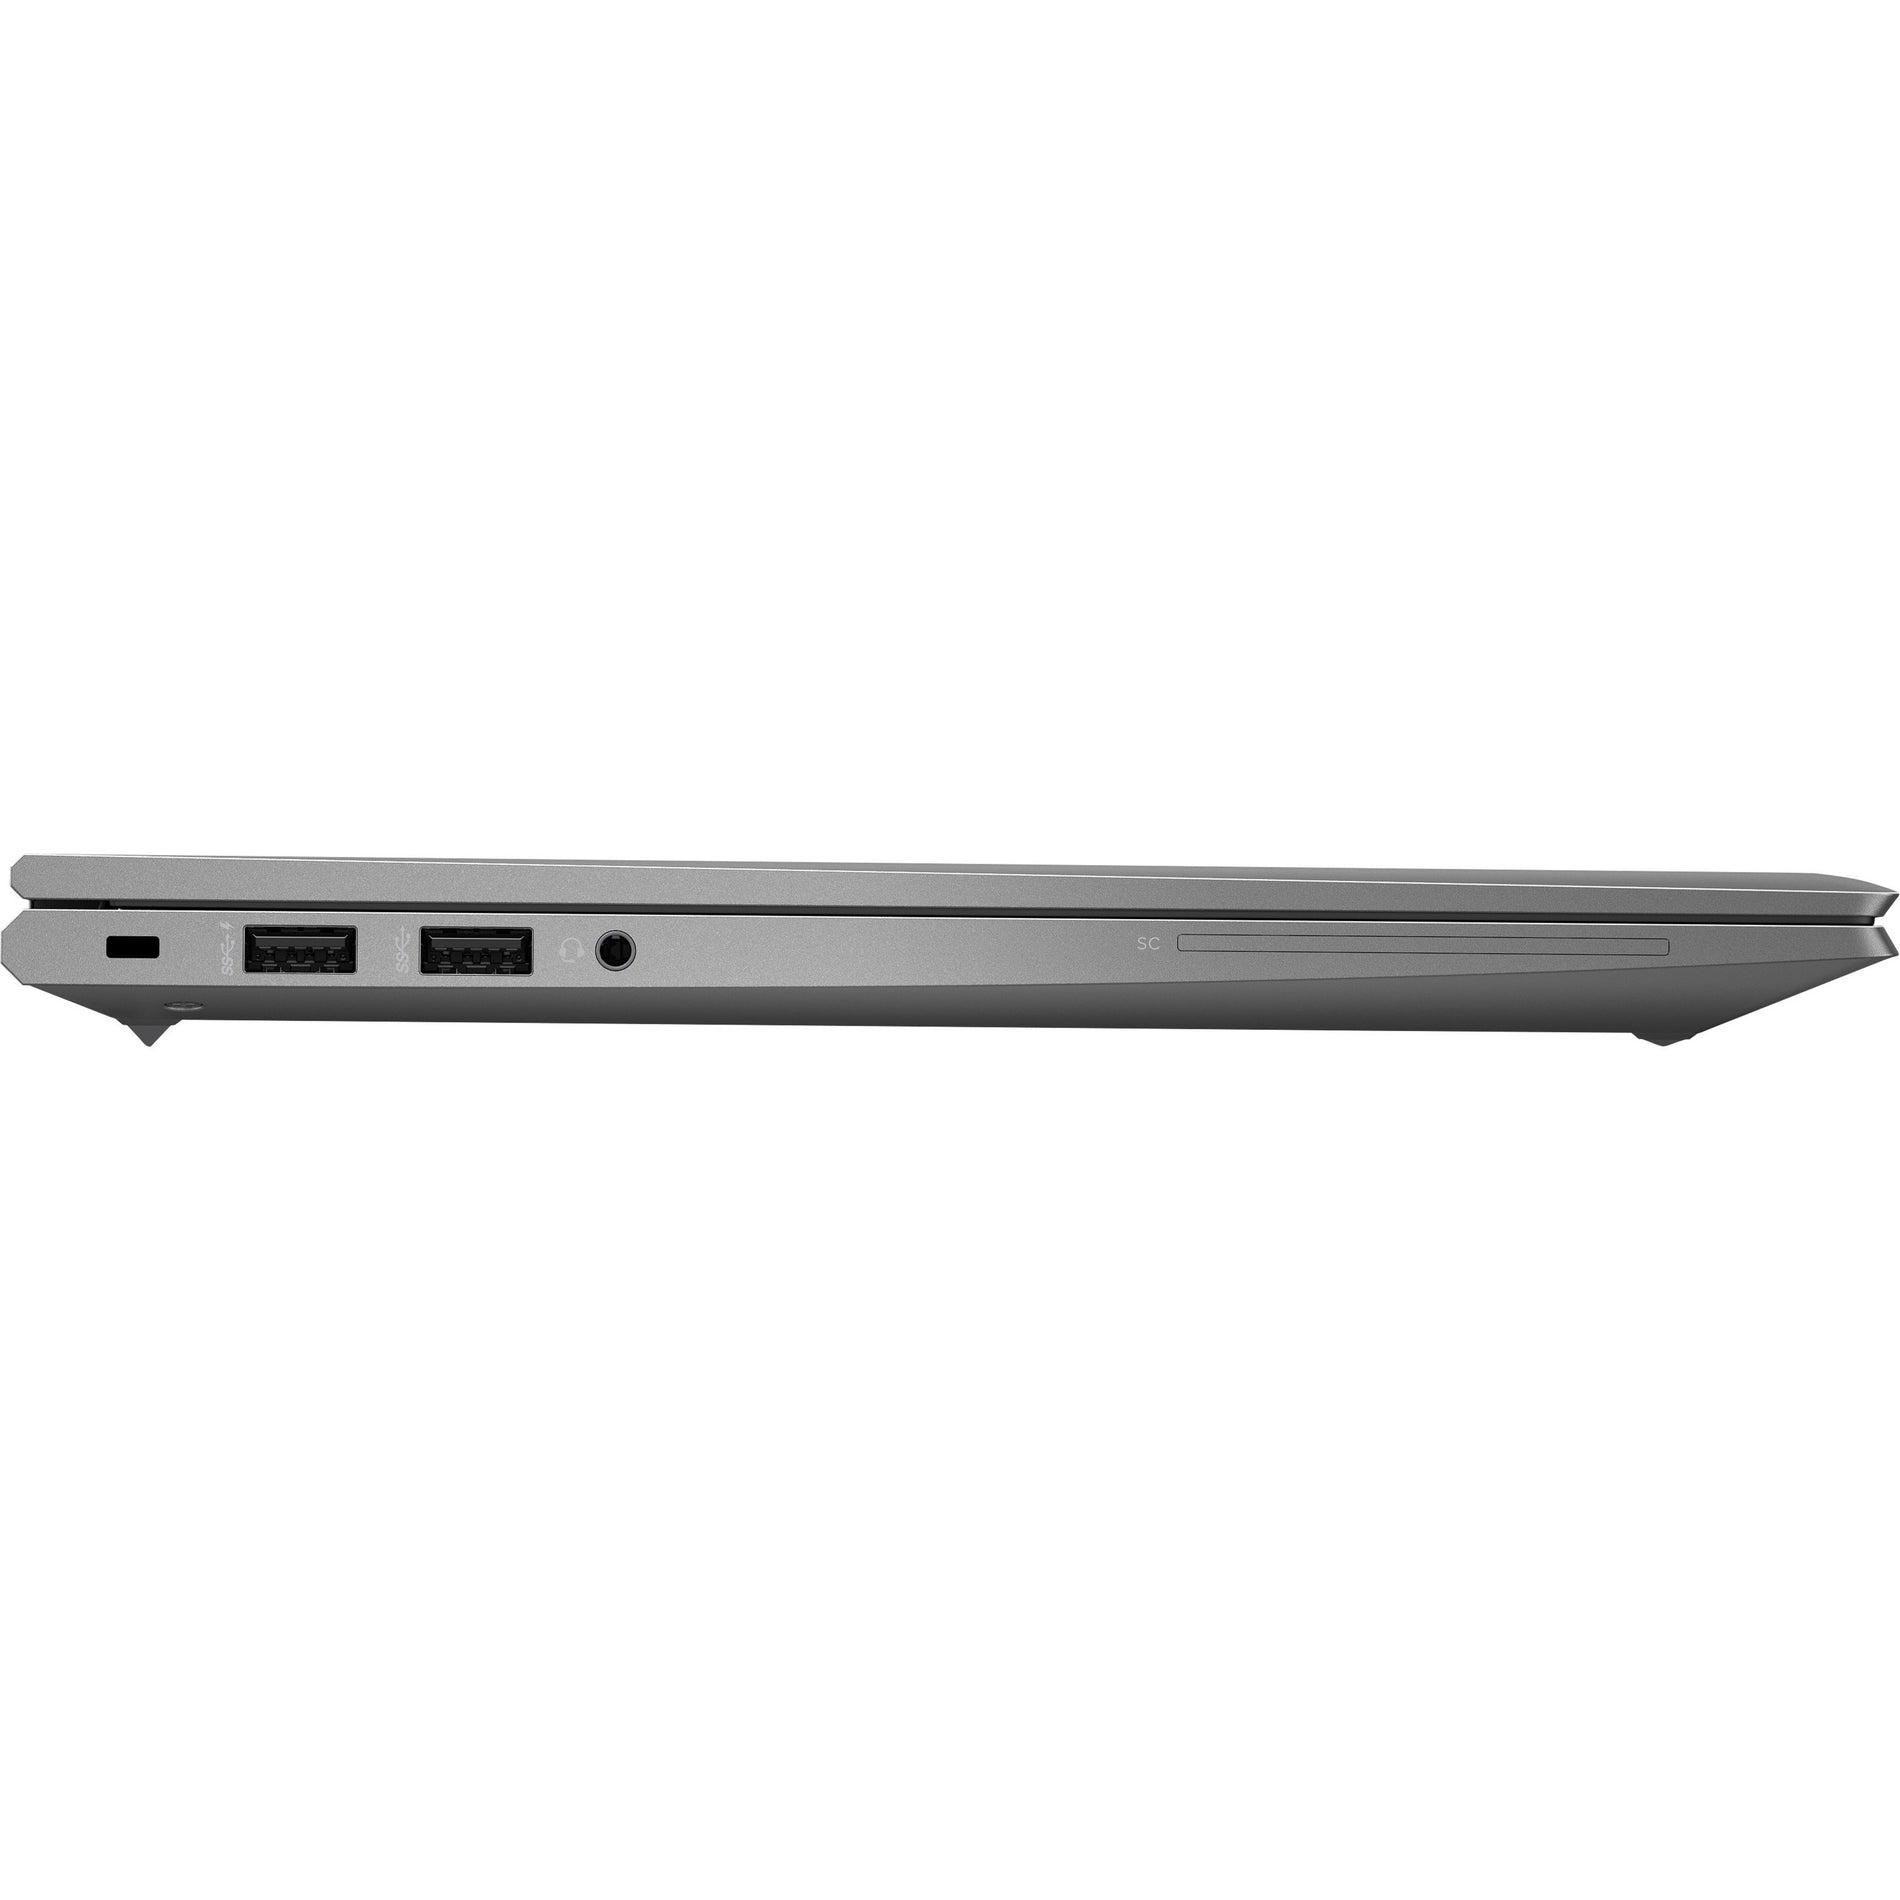 HP ZBook Firefly G8 14" Mobile Workstation, Full HD, Intel Core i5 11th Gen, 16GB RAM, 256GB SSD